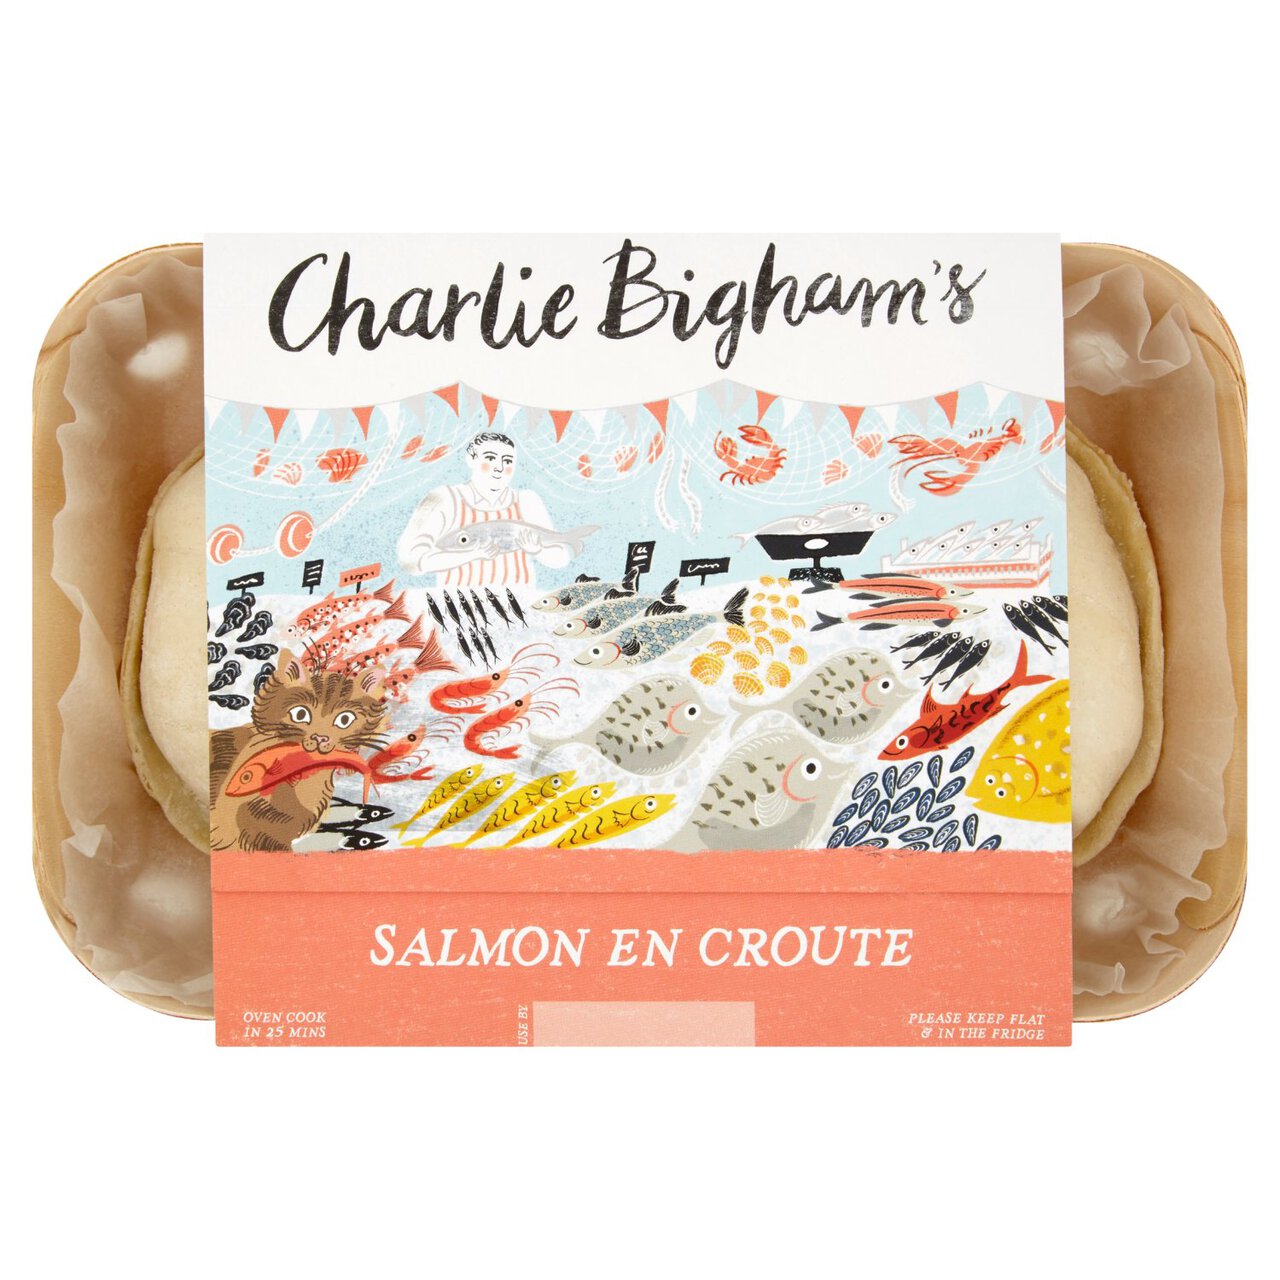 Charlie Bigham's 2 Salmon En Croutes 440g